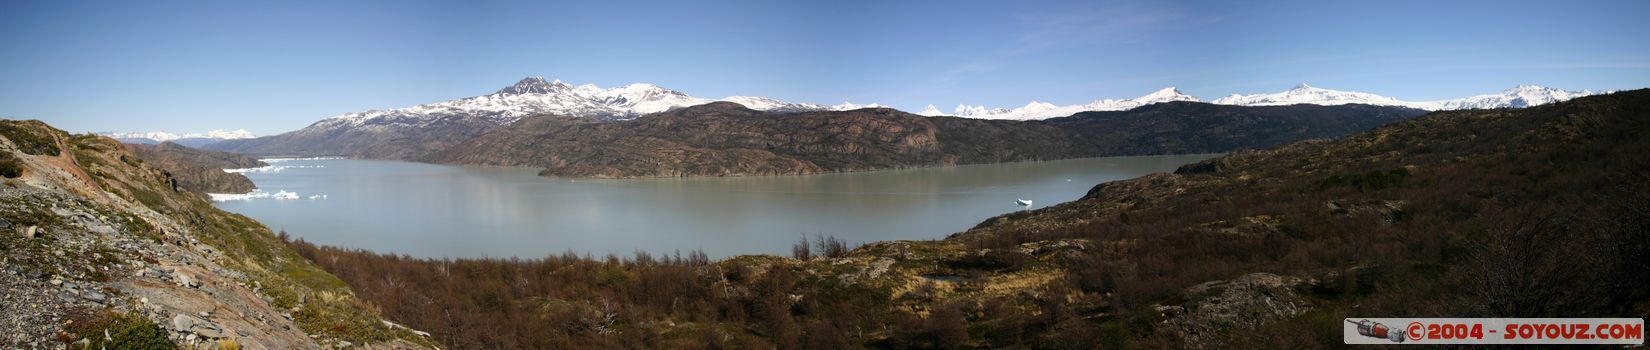 Parque Nacional Torres del Paine - Lago Grey - panorama
Mots-clés: chile Lac panorama